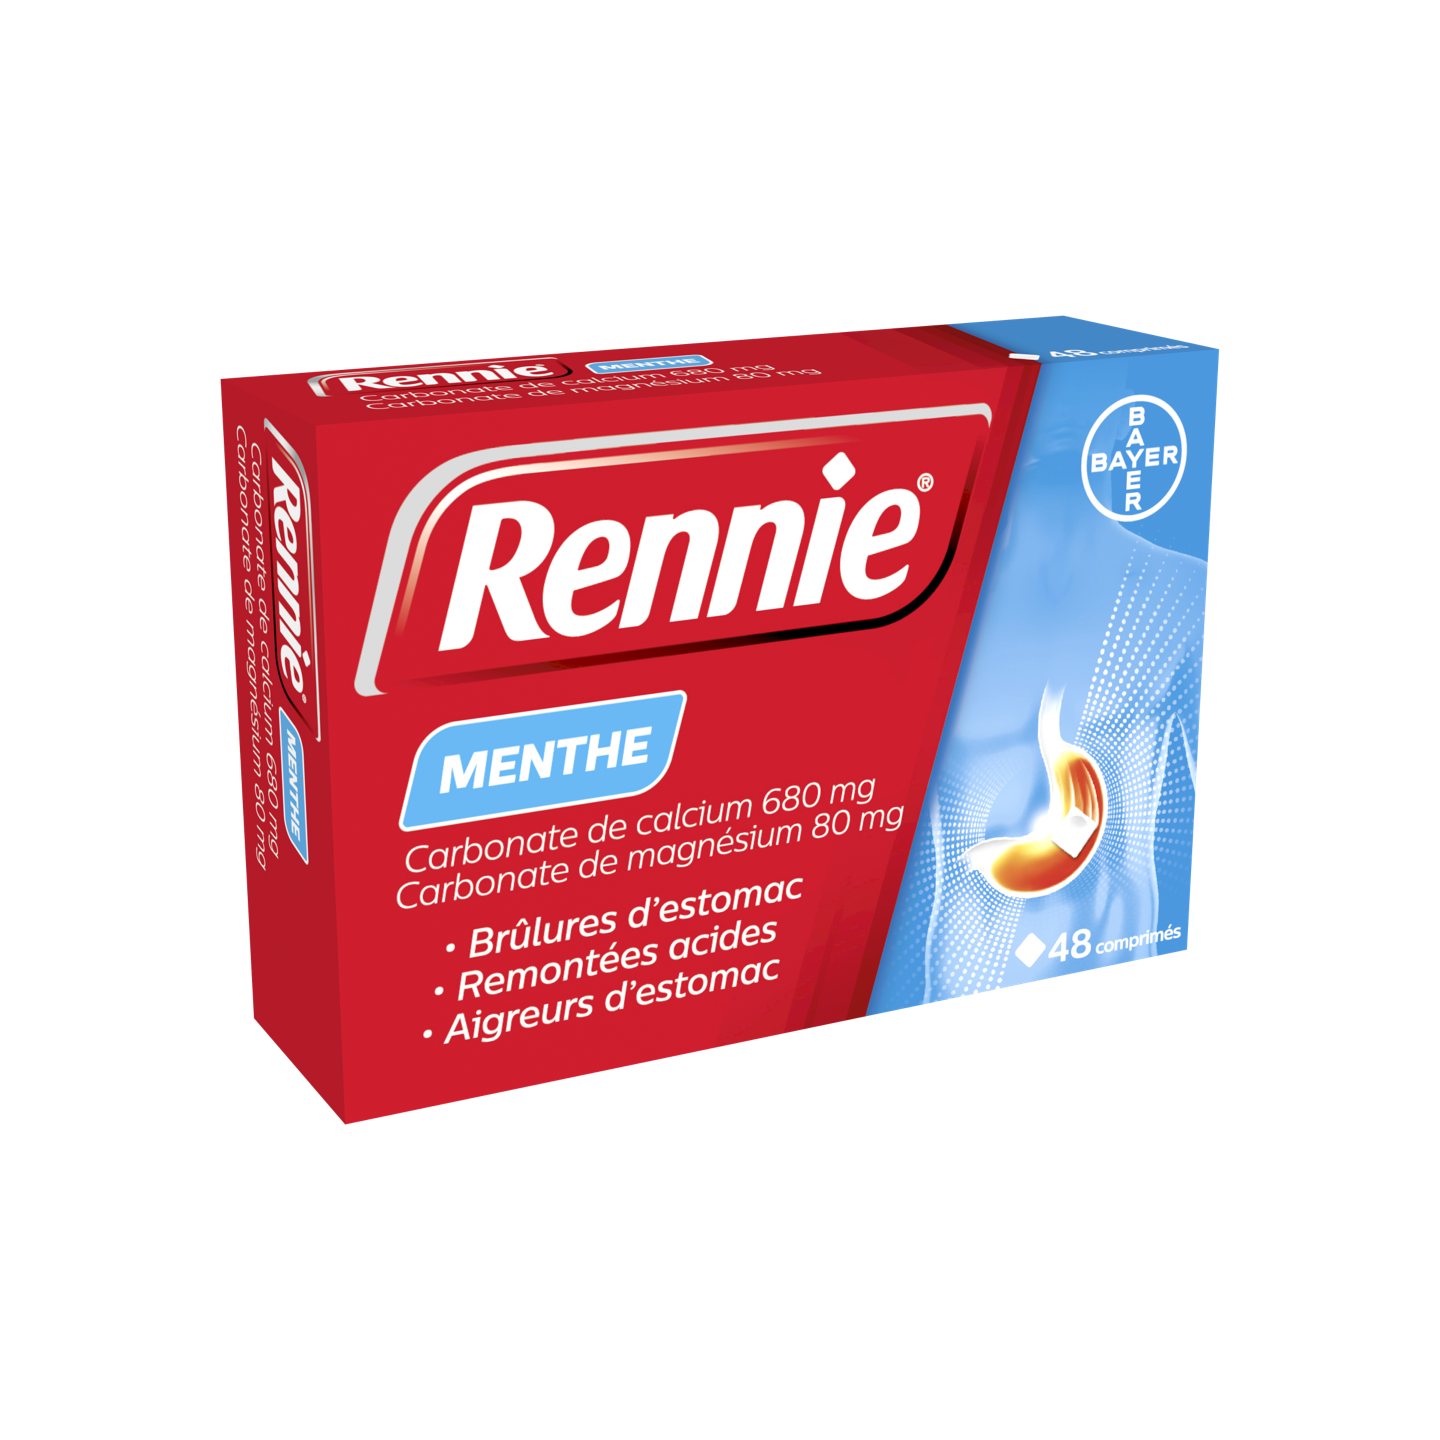 Rennie Menthe pdp new